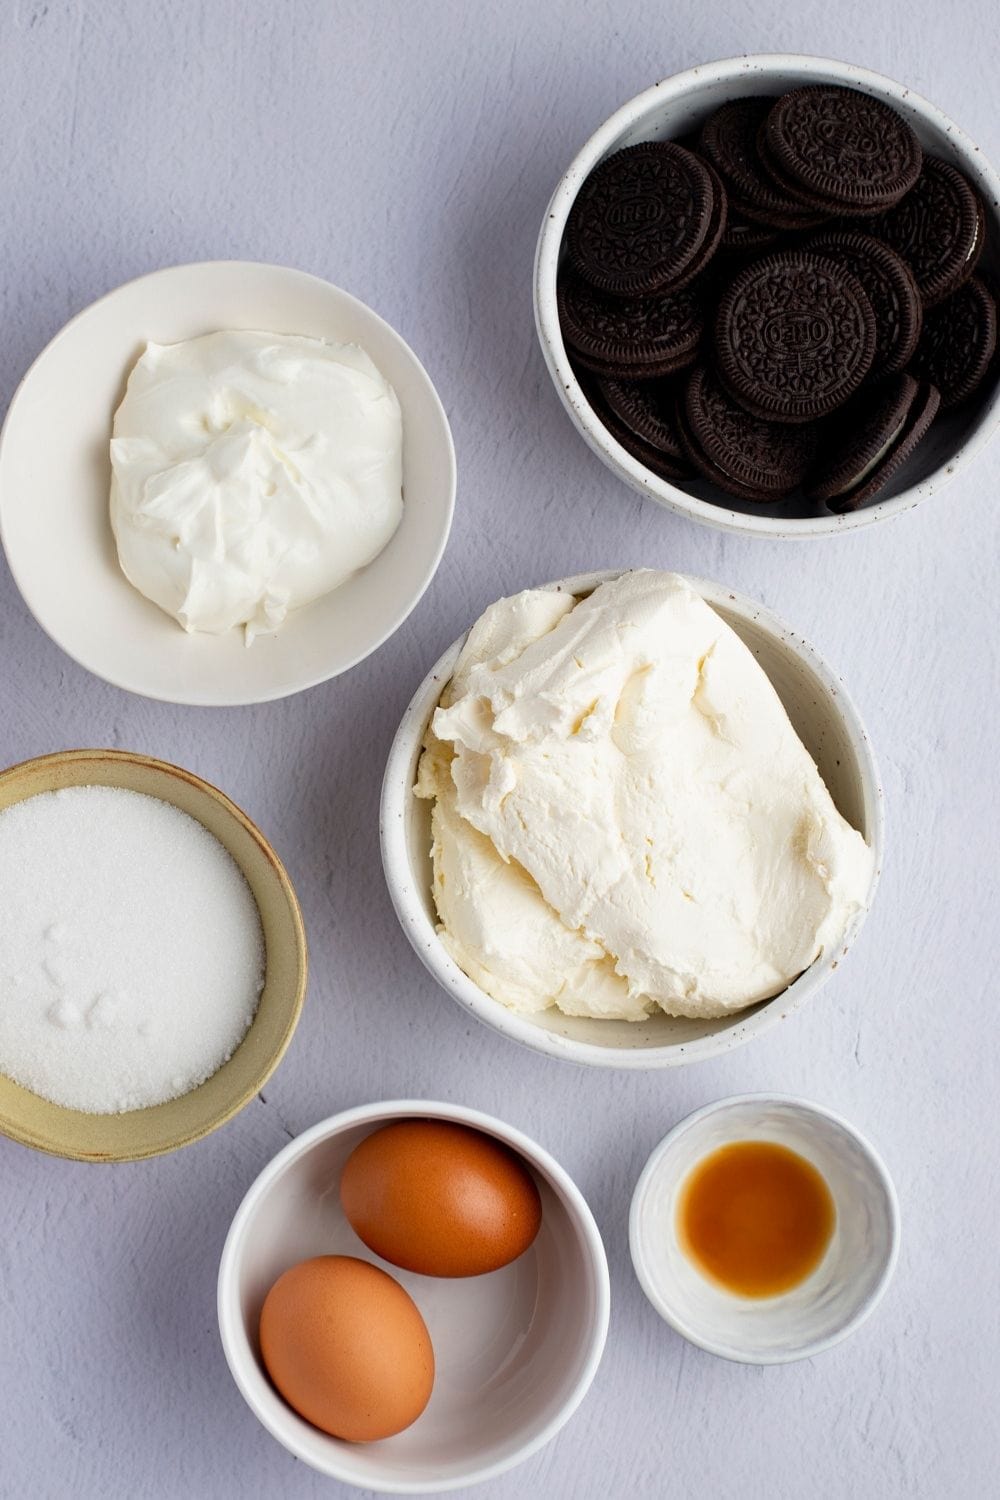 Oreo Cheesecake Bites Ingredients: Vanilla Extract, Oreo Cookies, Eggs, Cream Cheese and Sugar